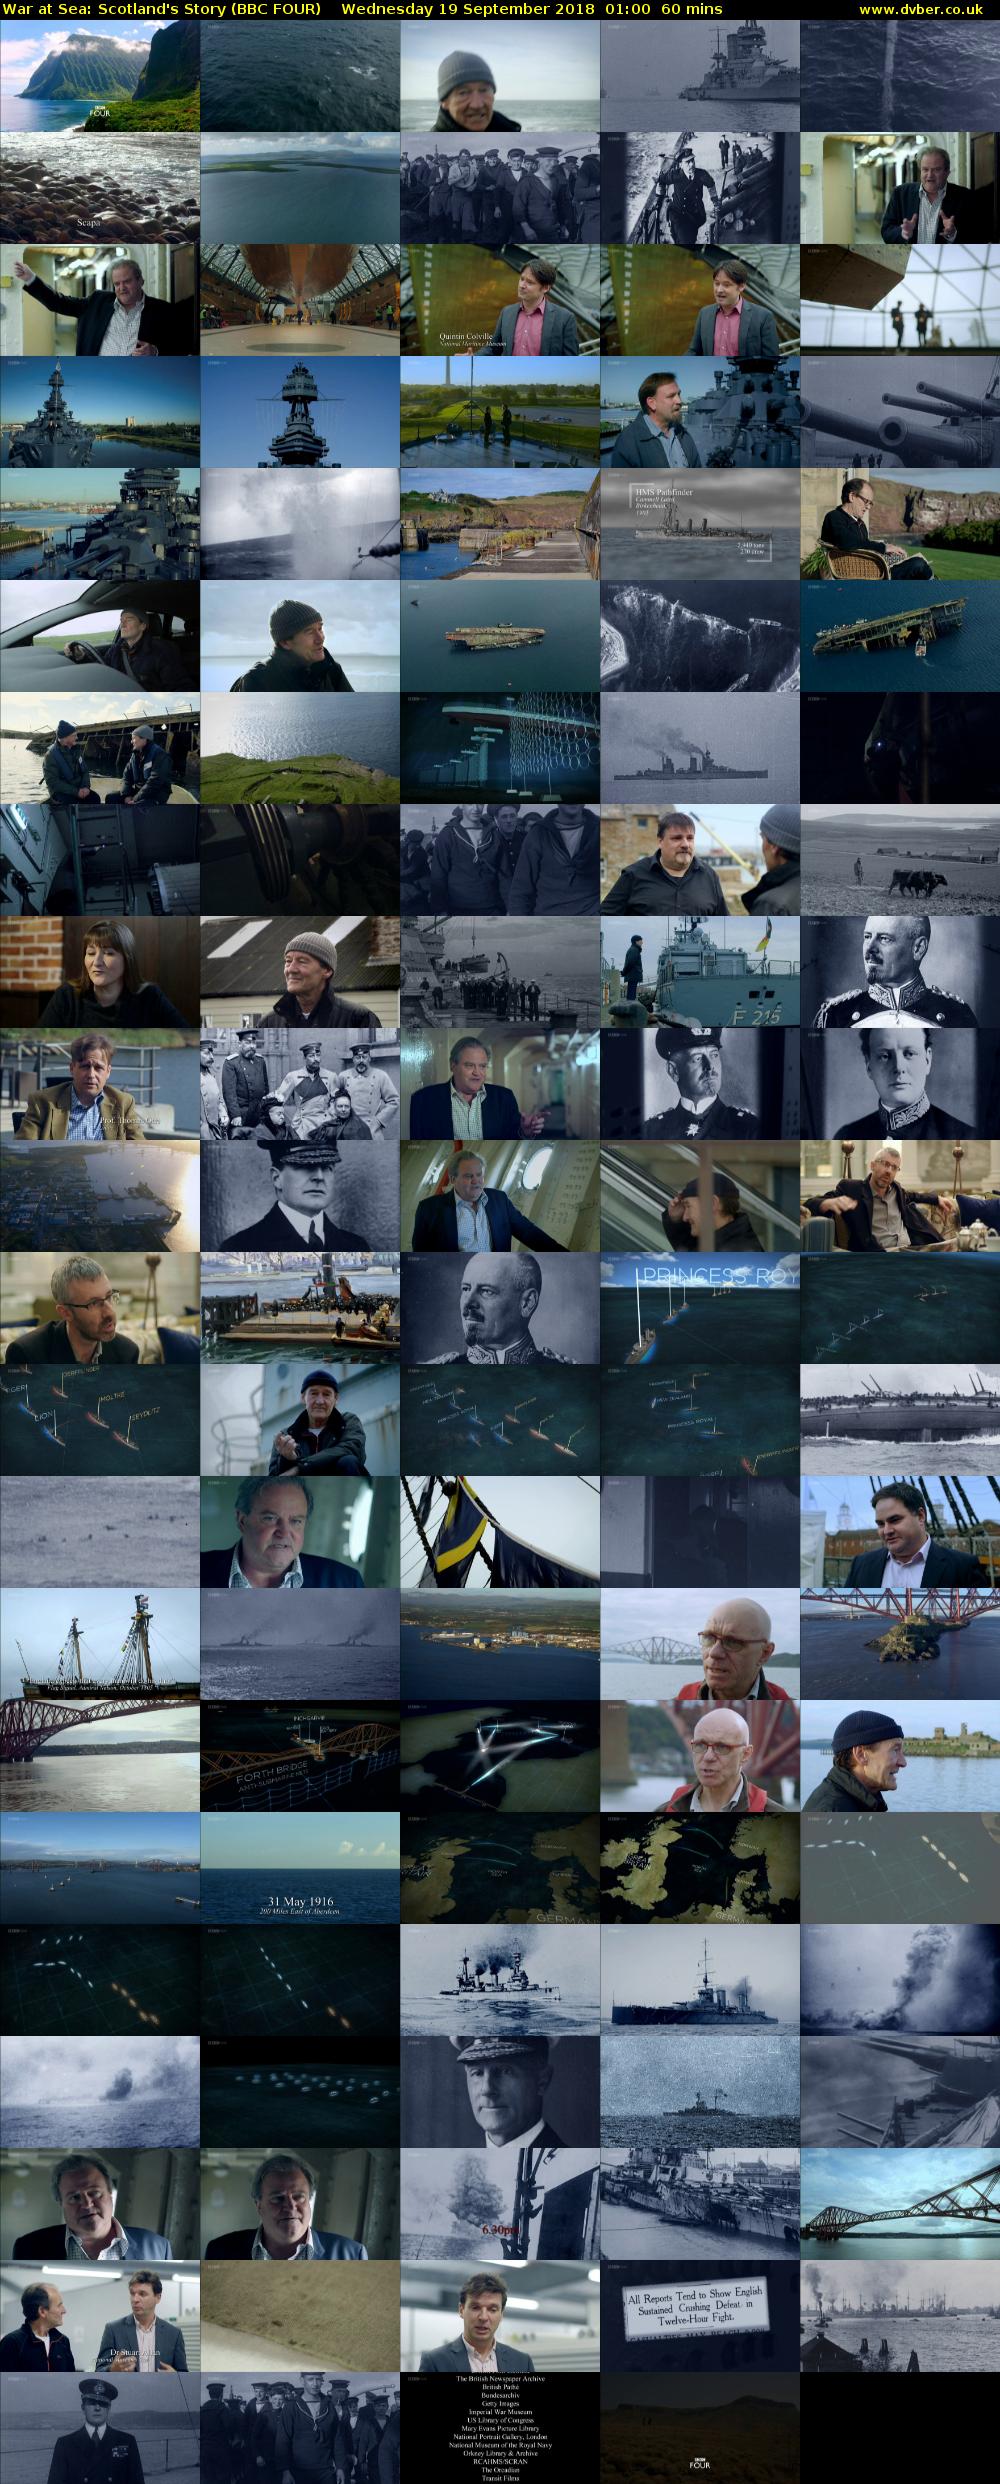 War at Sea: Scotland's Story (BBC FOUR) Wednesday 19 September 2018 01:00 - 02:00